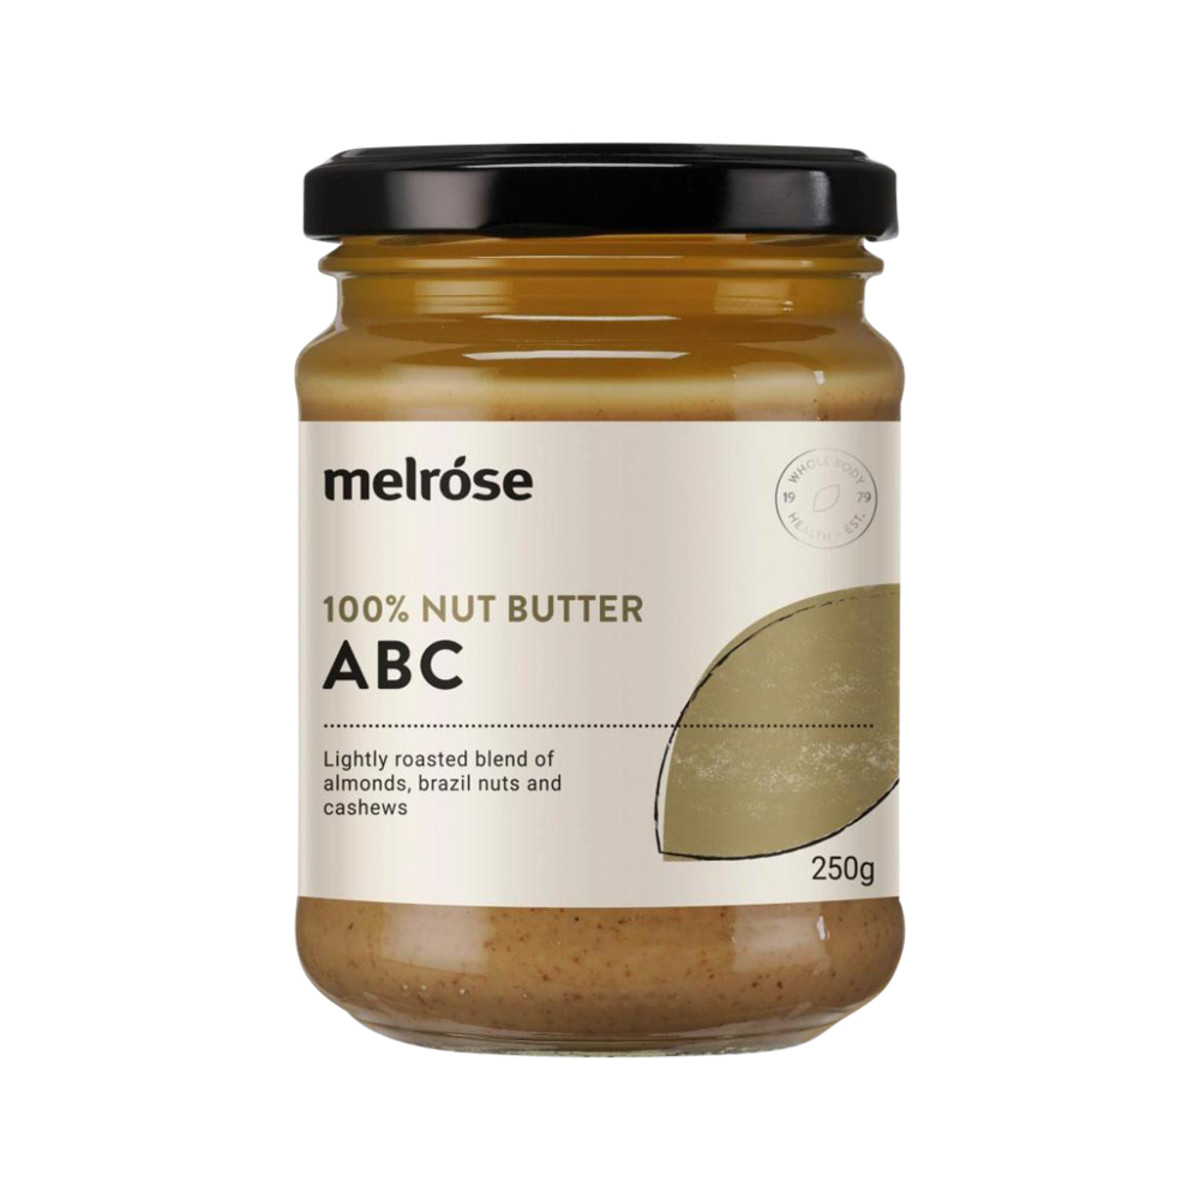 MELROSE - 100% Nut Butter ABC